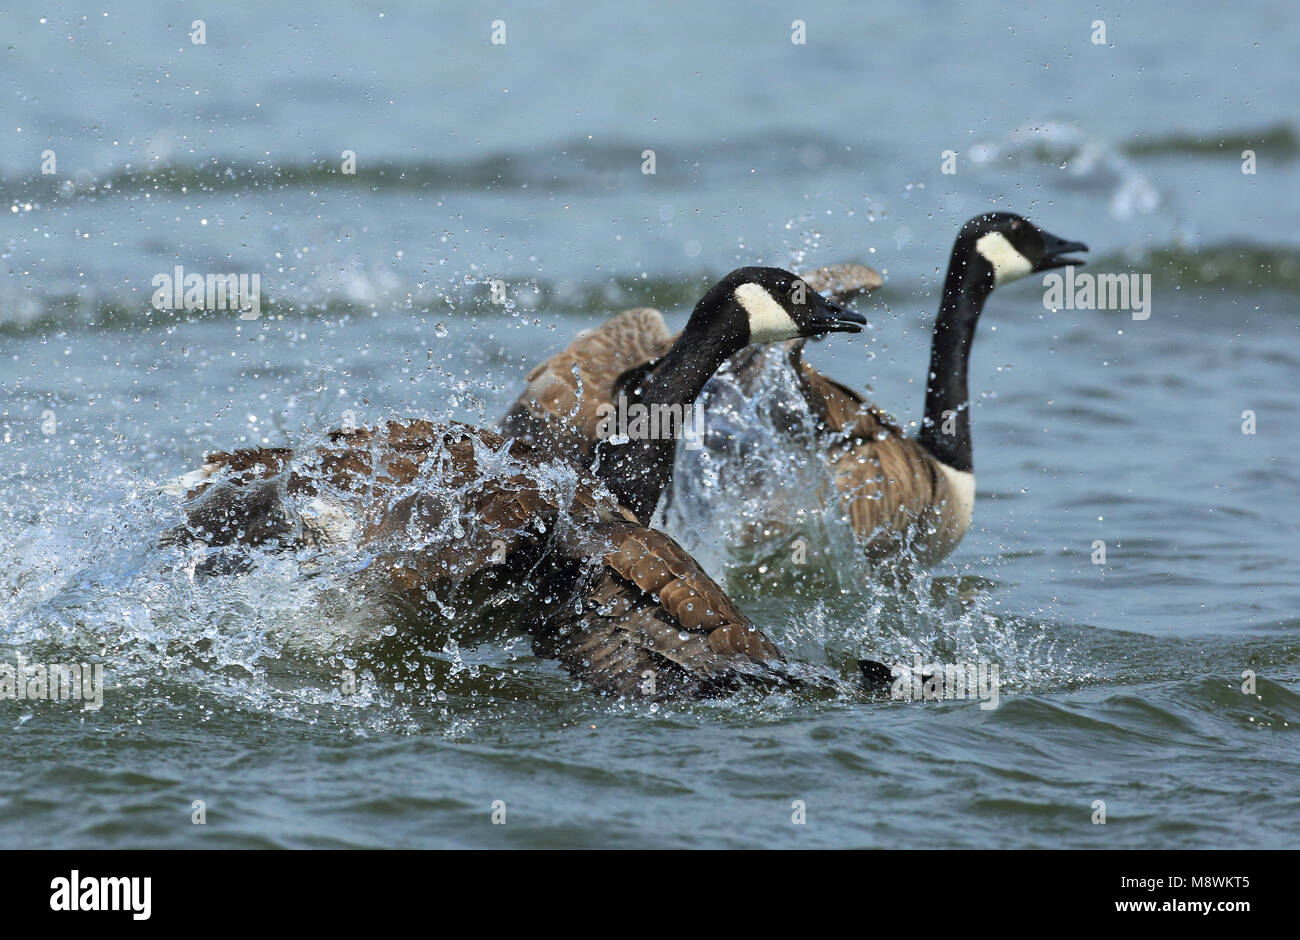 Canadese ganzen in water, Canada Geese in water Stock Photo